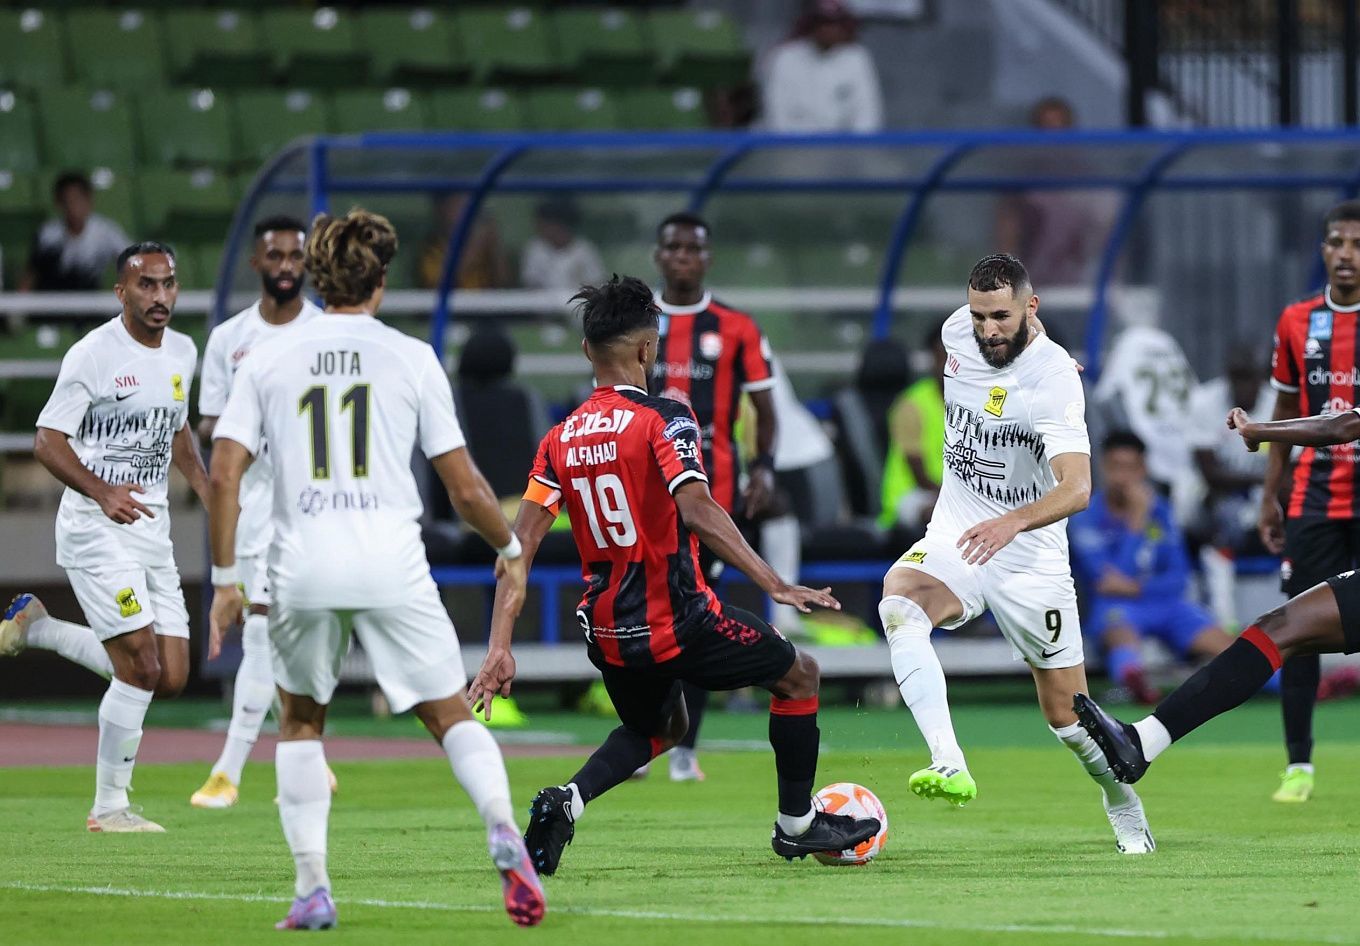 Sepahan vs Al Ittihad: Where and how to watch?